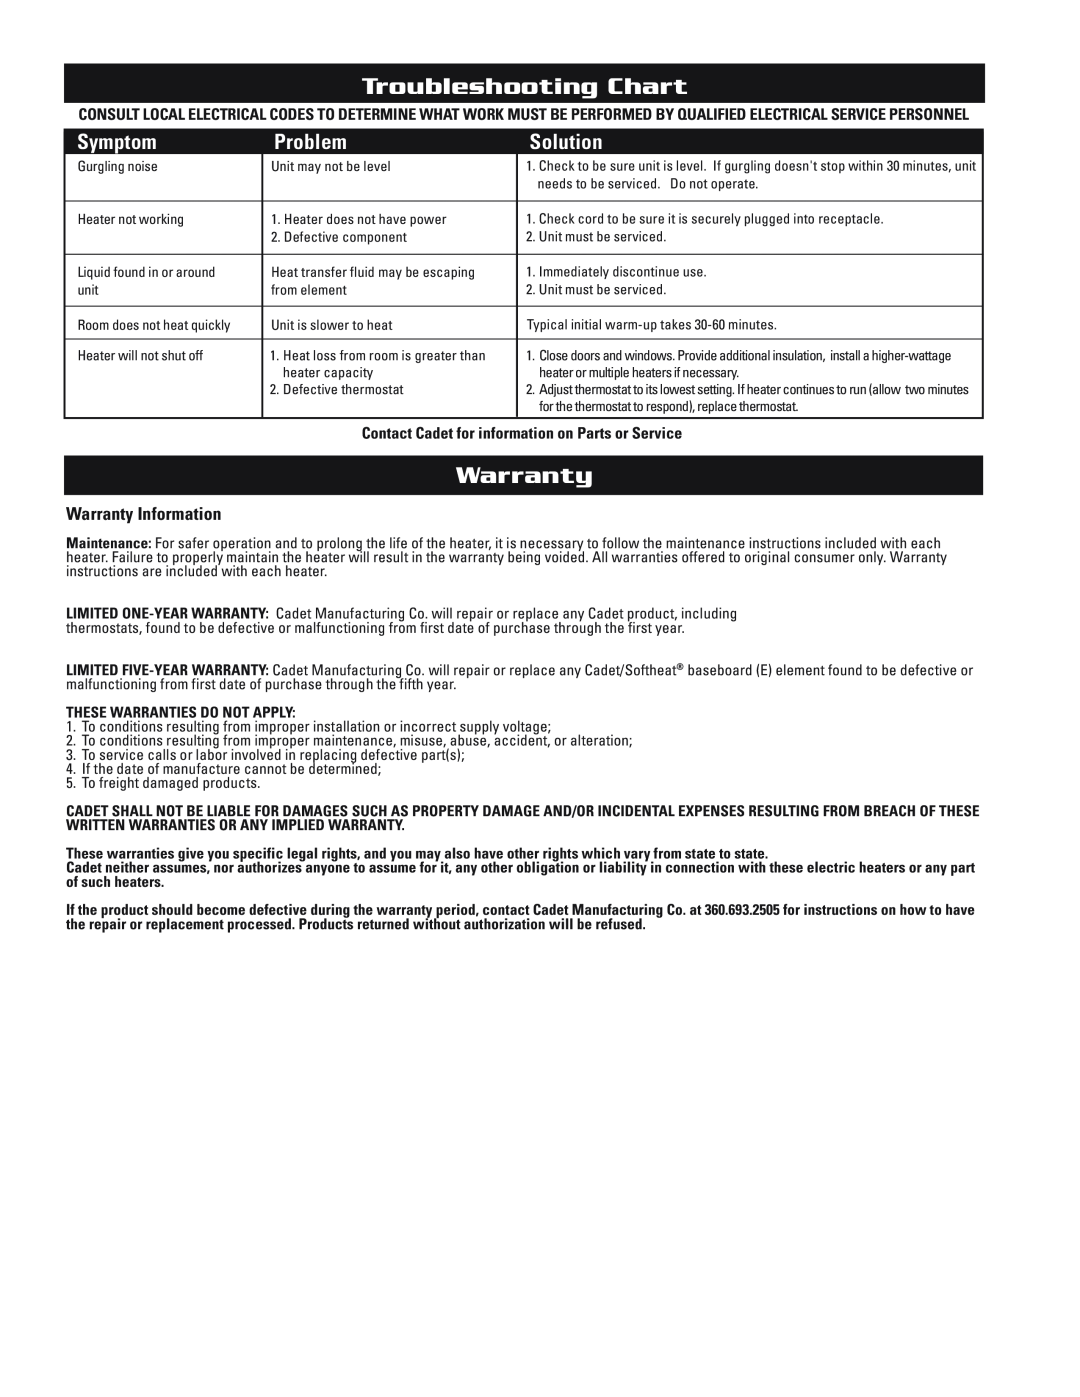 Cadet EPA1000, EPA750, EPA1500/3 warranty Troubleshooting Chart, Symptom, Problem, Solution, Warranty Information 